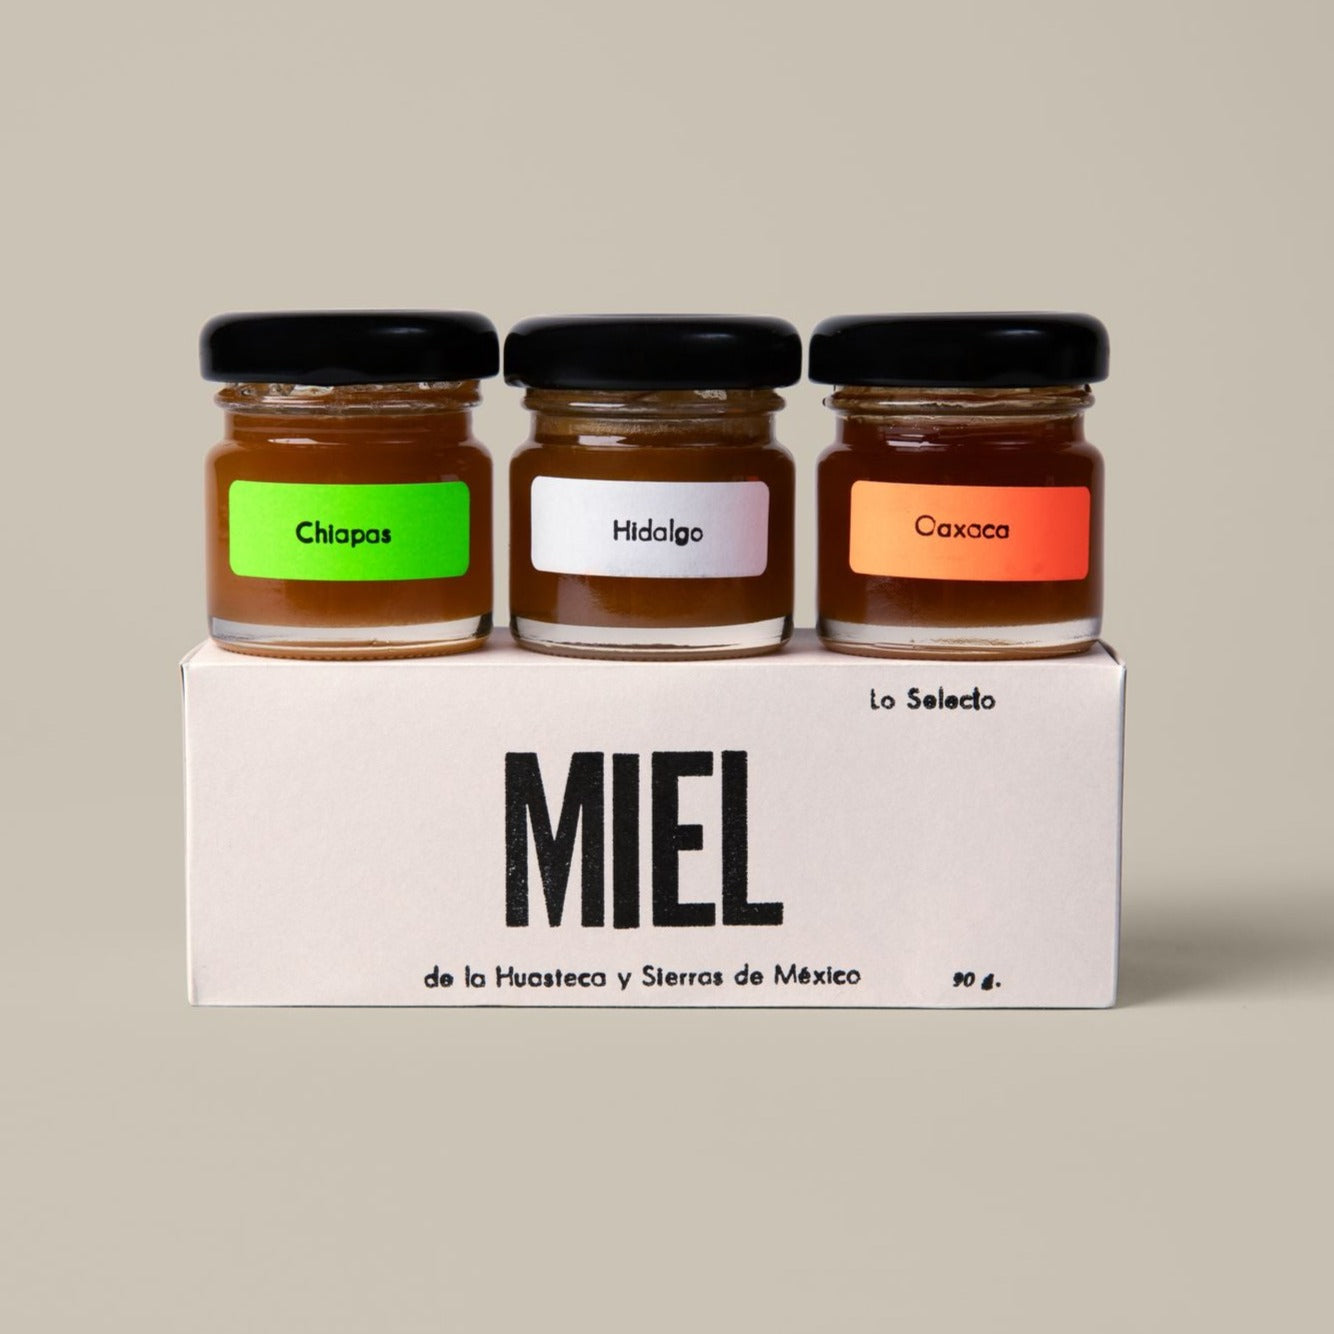 A honey kit featuring honey from three regions of Mexico.